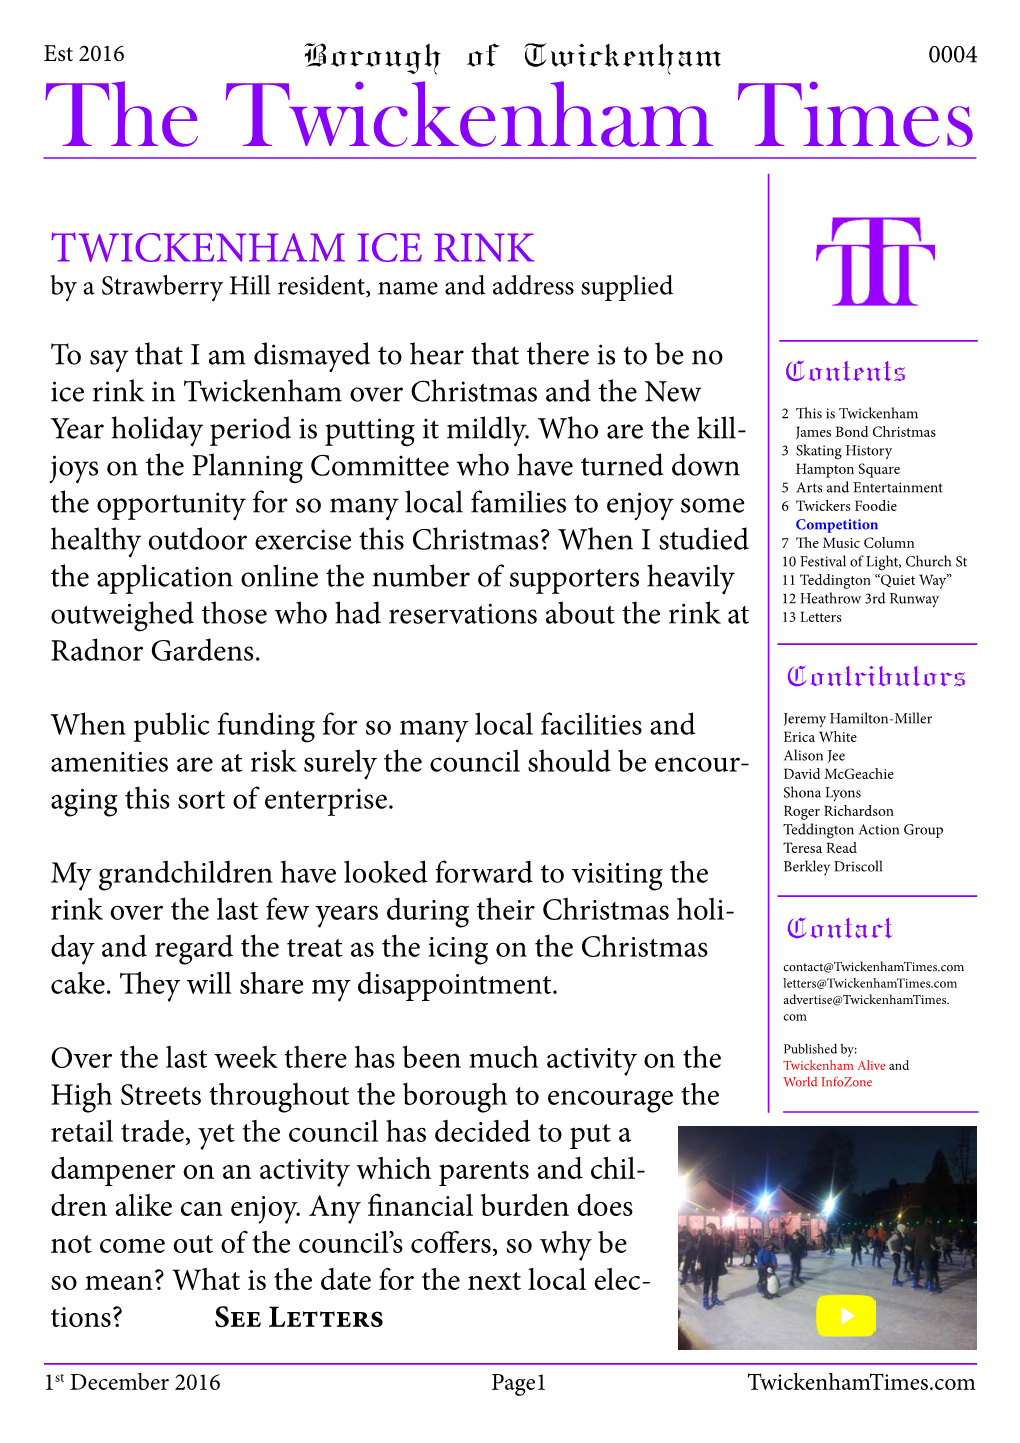 The Twickenham Times